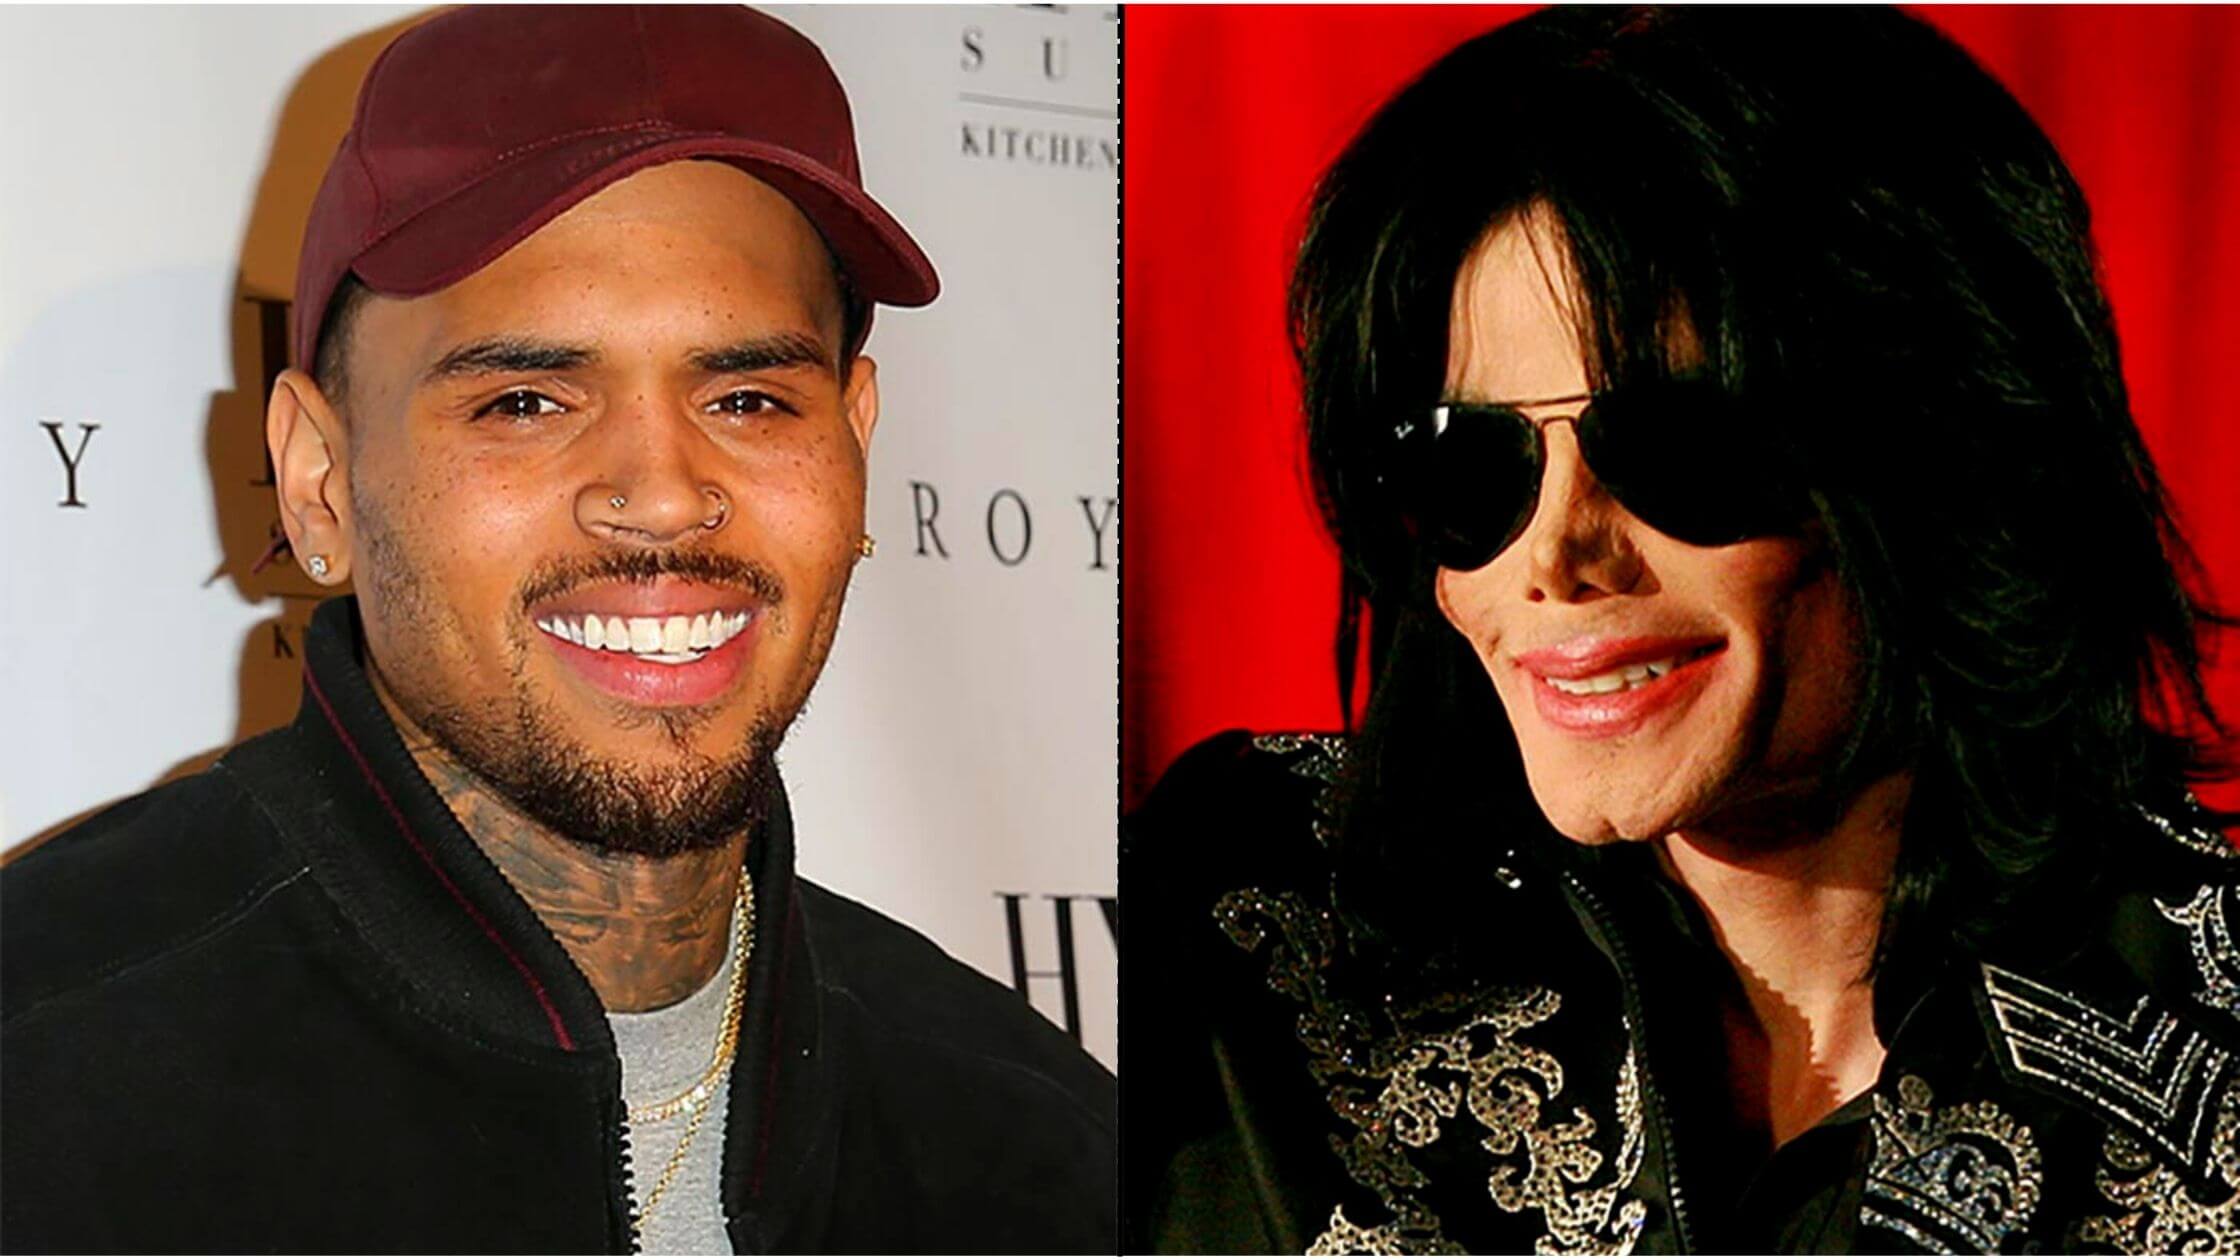 Chris Brown Creates A Viral Response To Public About Michael Jackson Comparisons